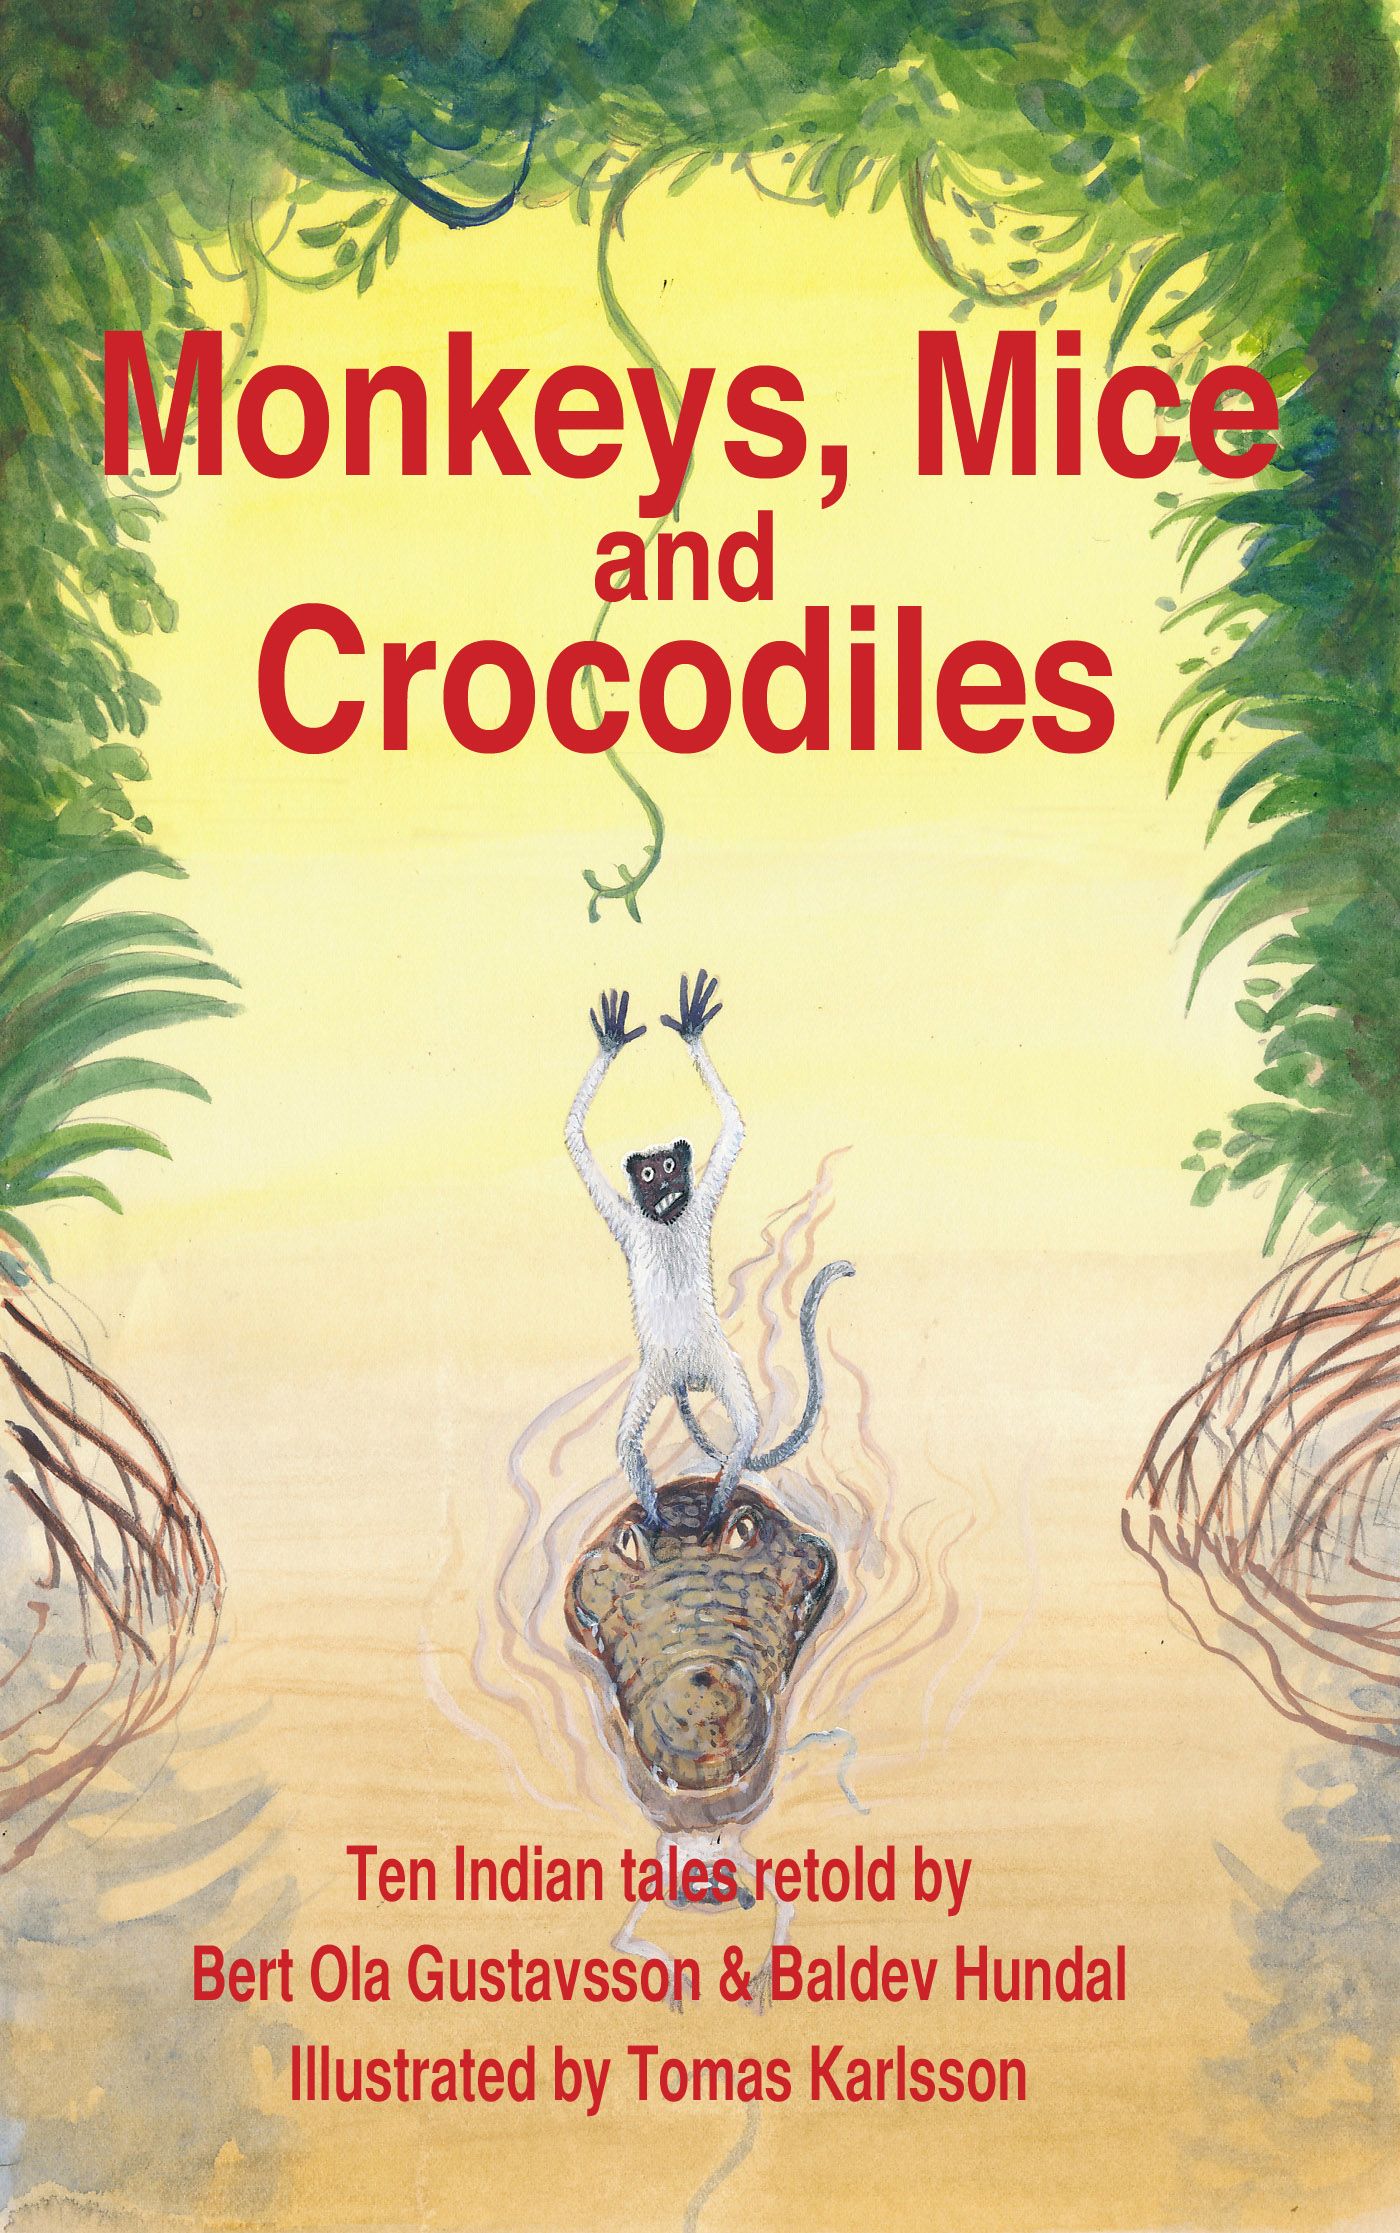 Monkeys, Mice and Crocodiles, e-bog af Bert Ola Gustavsson, Baldev Hundal